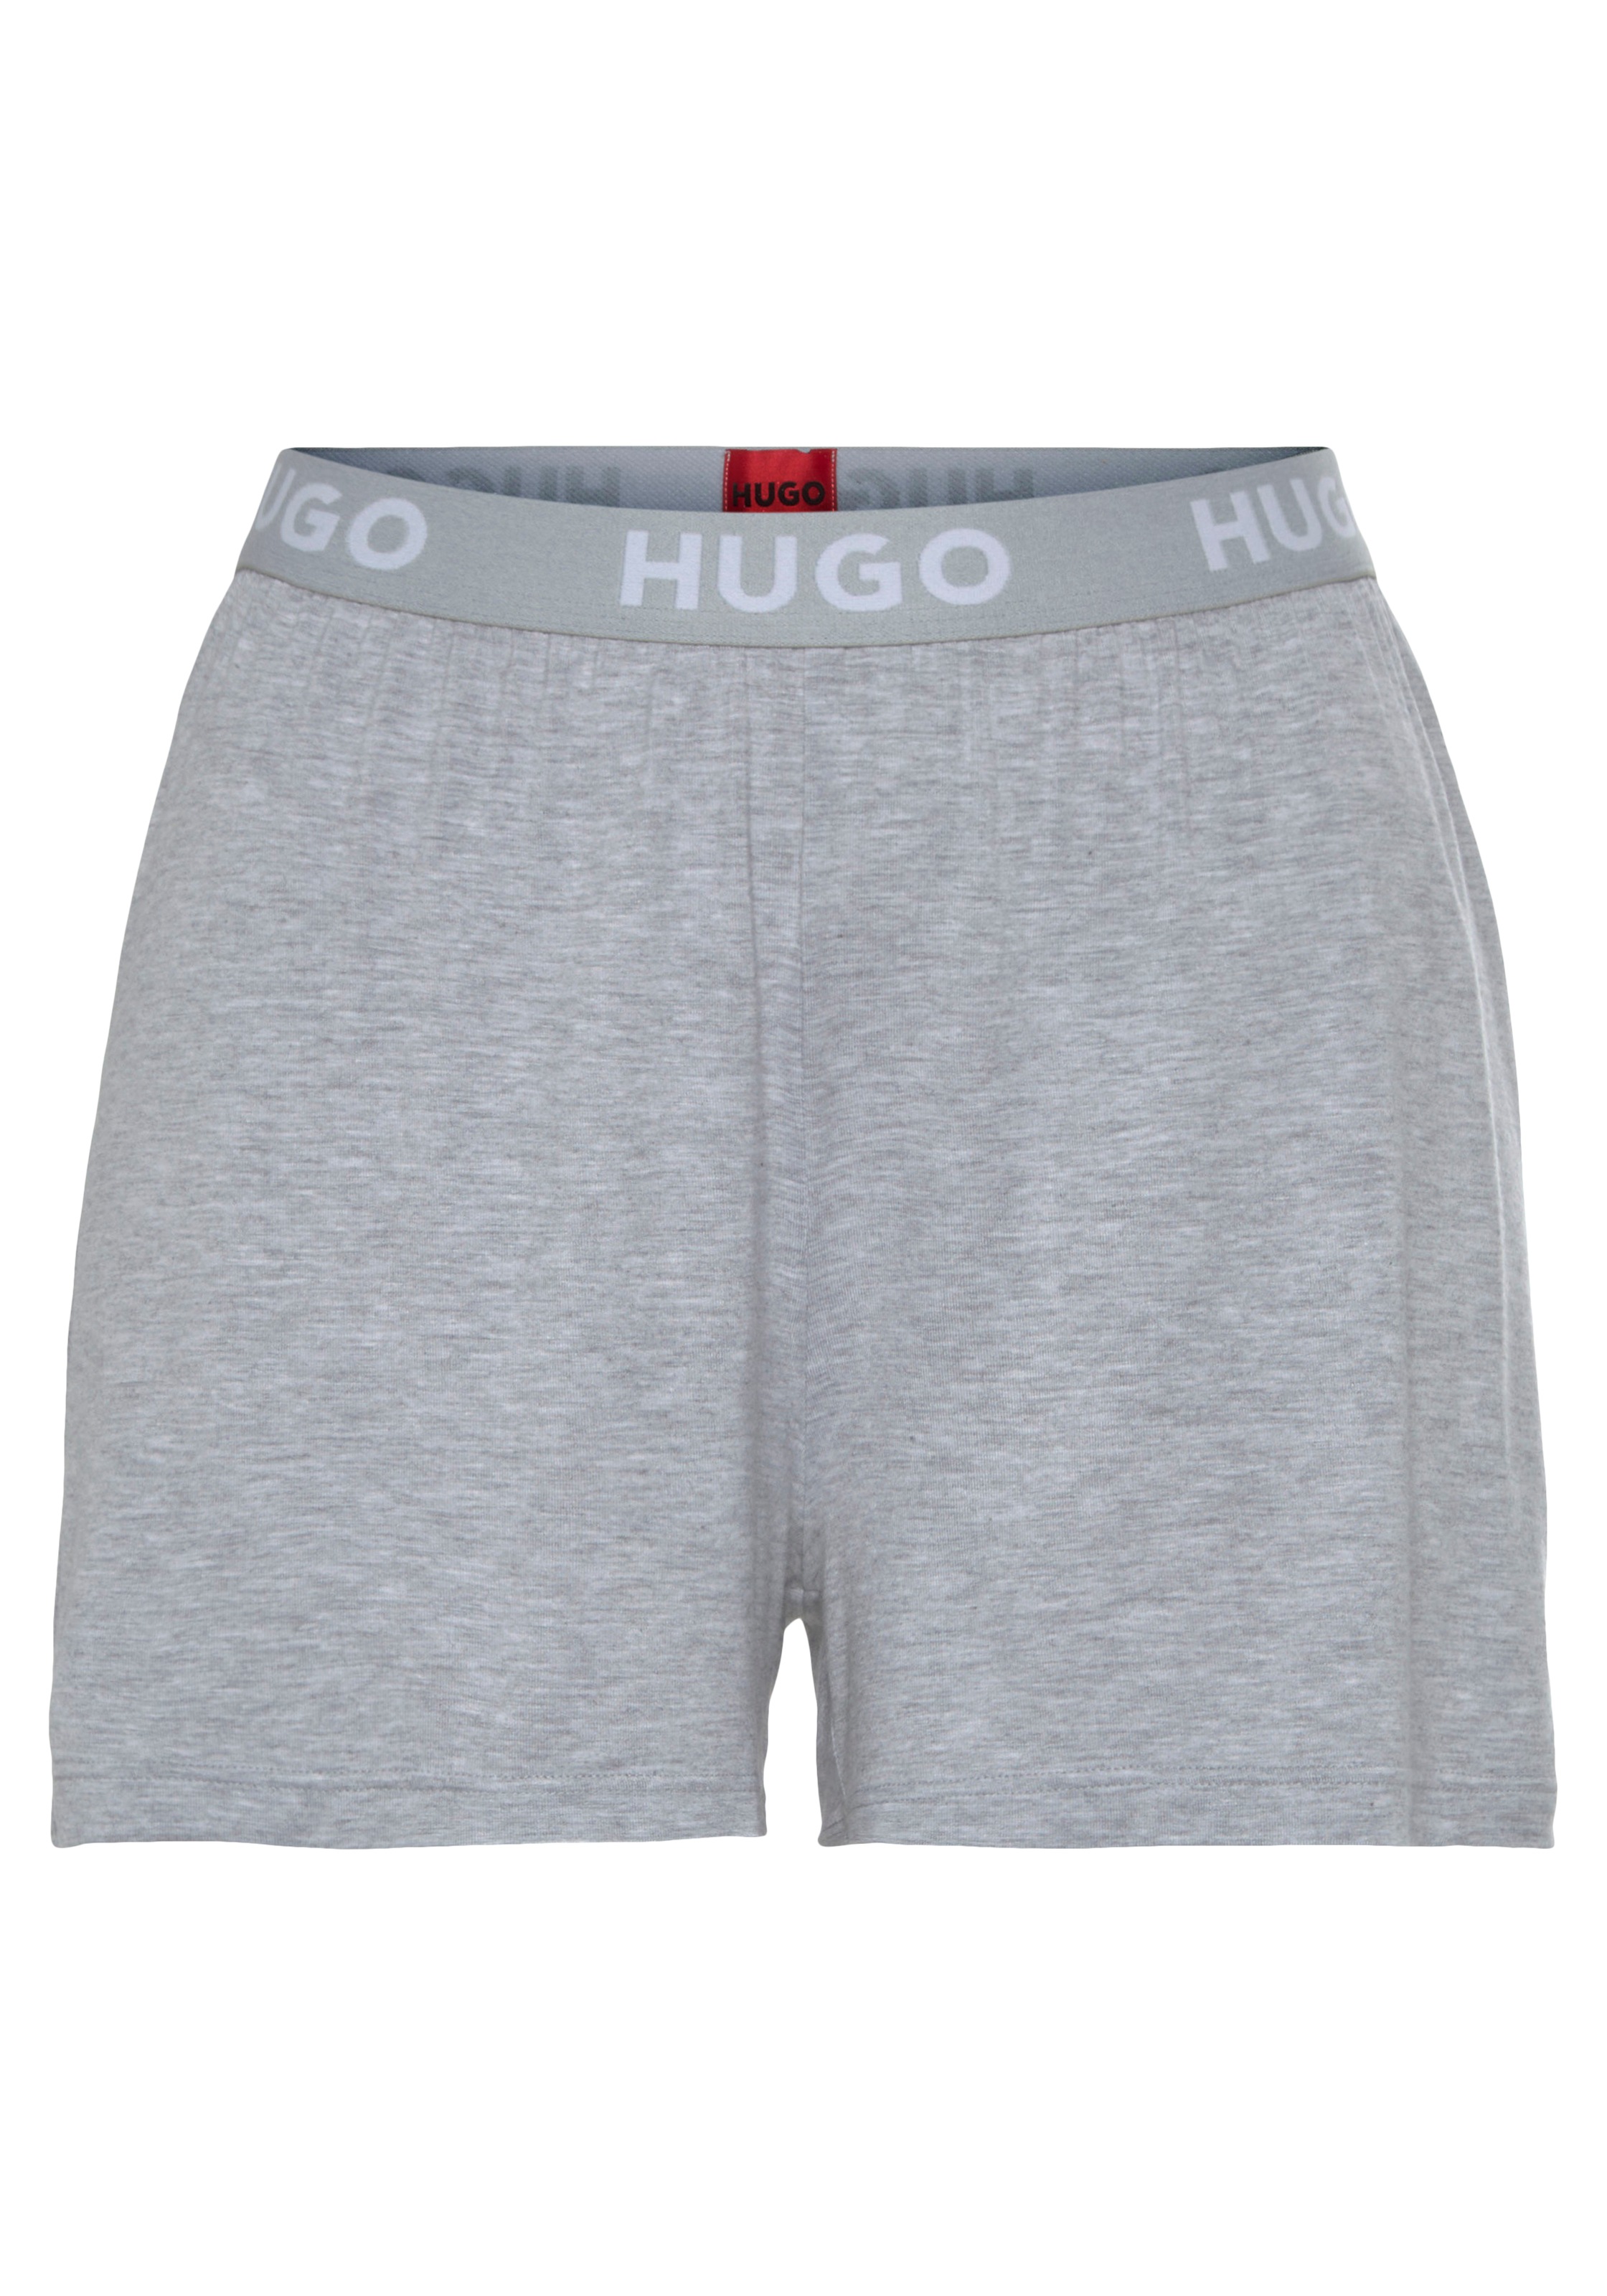 HUGO Underwear Hugo Schlafshorts »UNITE_SHORTS« su Hu...